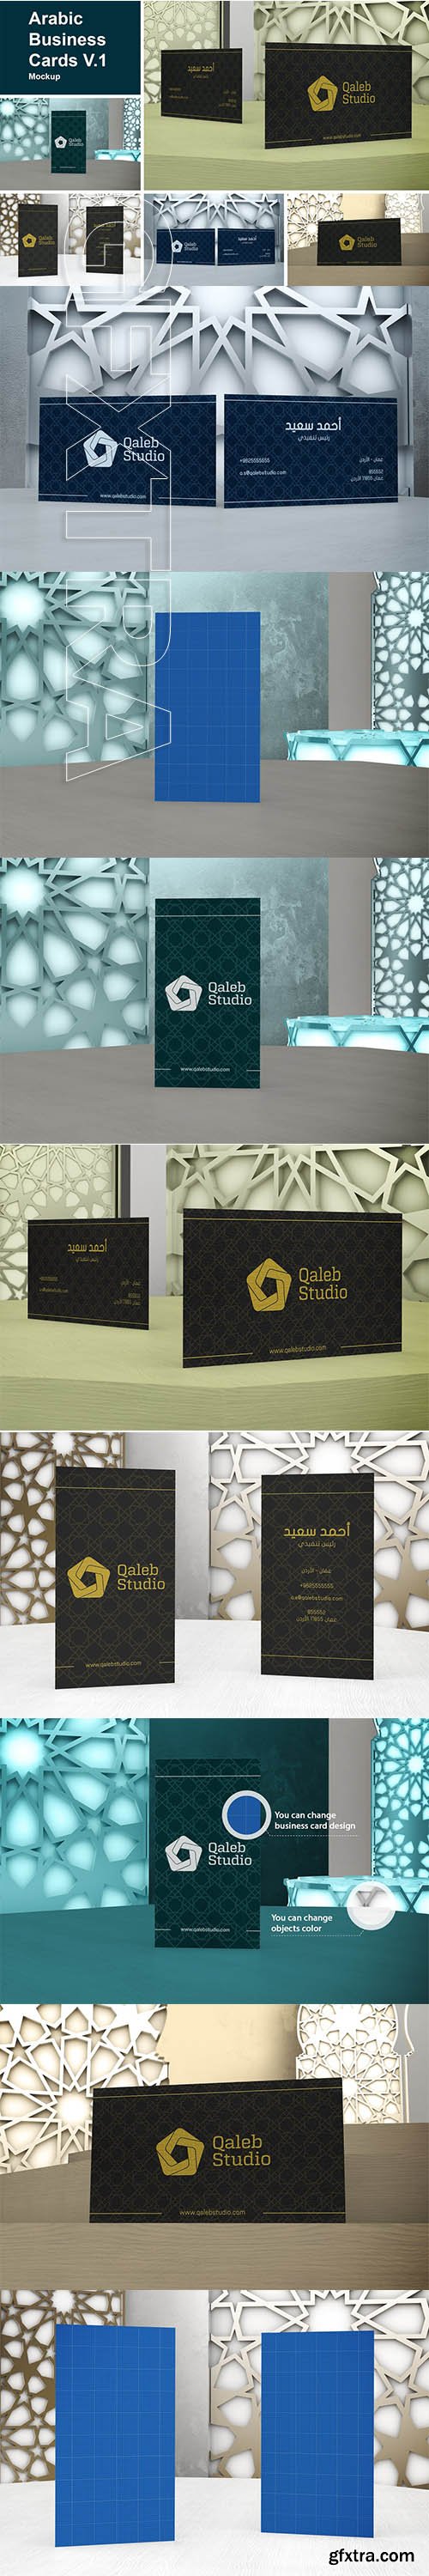 Arabic Business Cards V.1